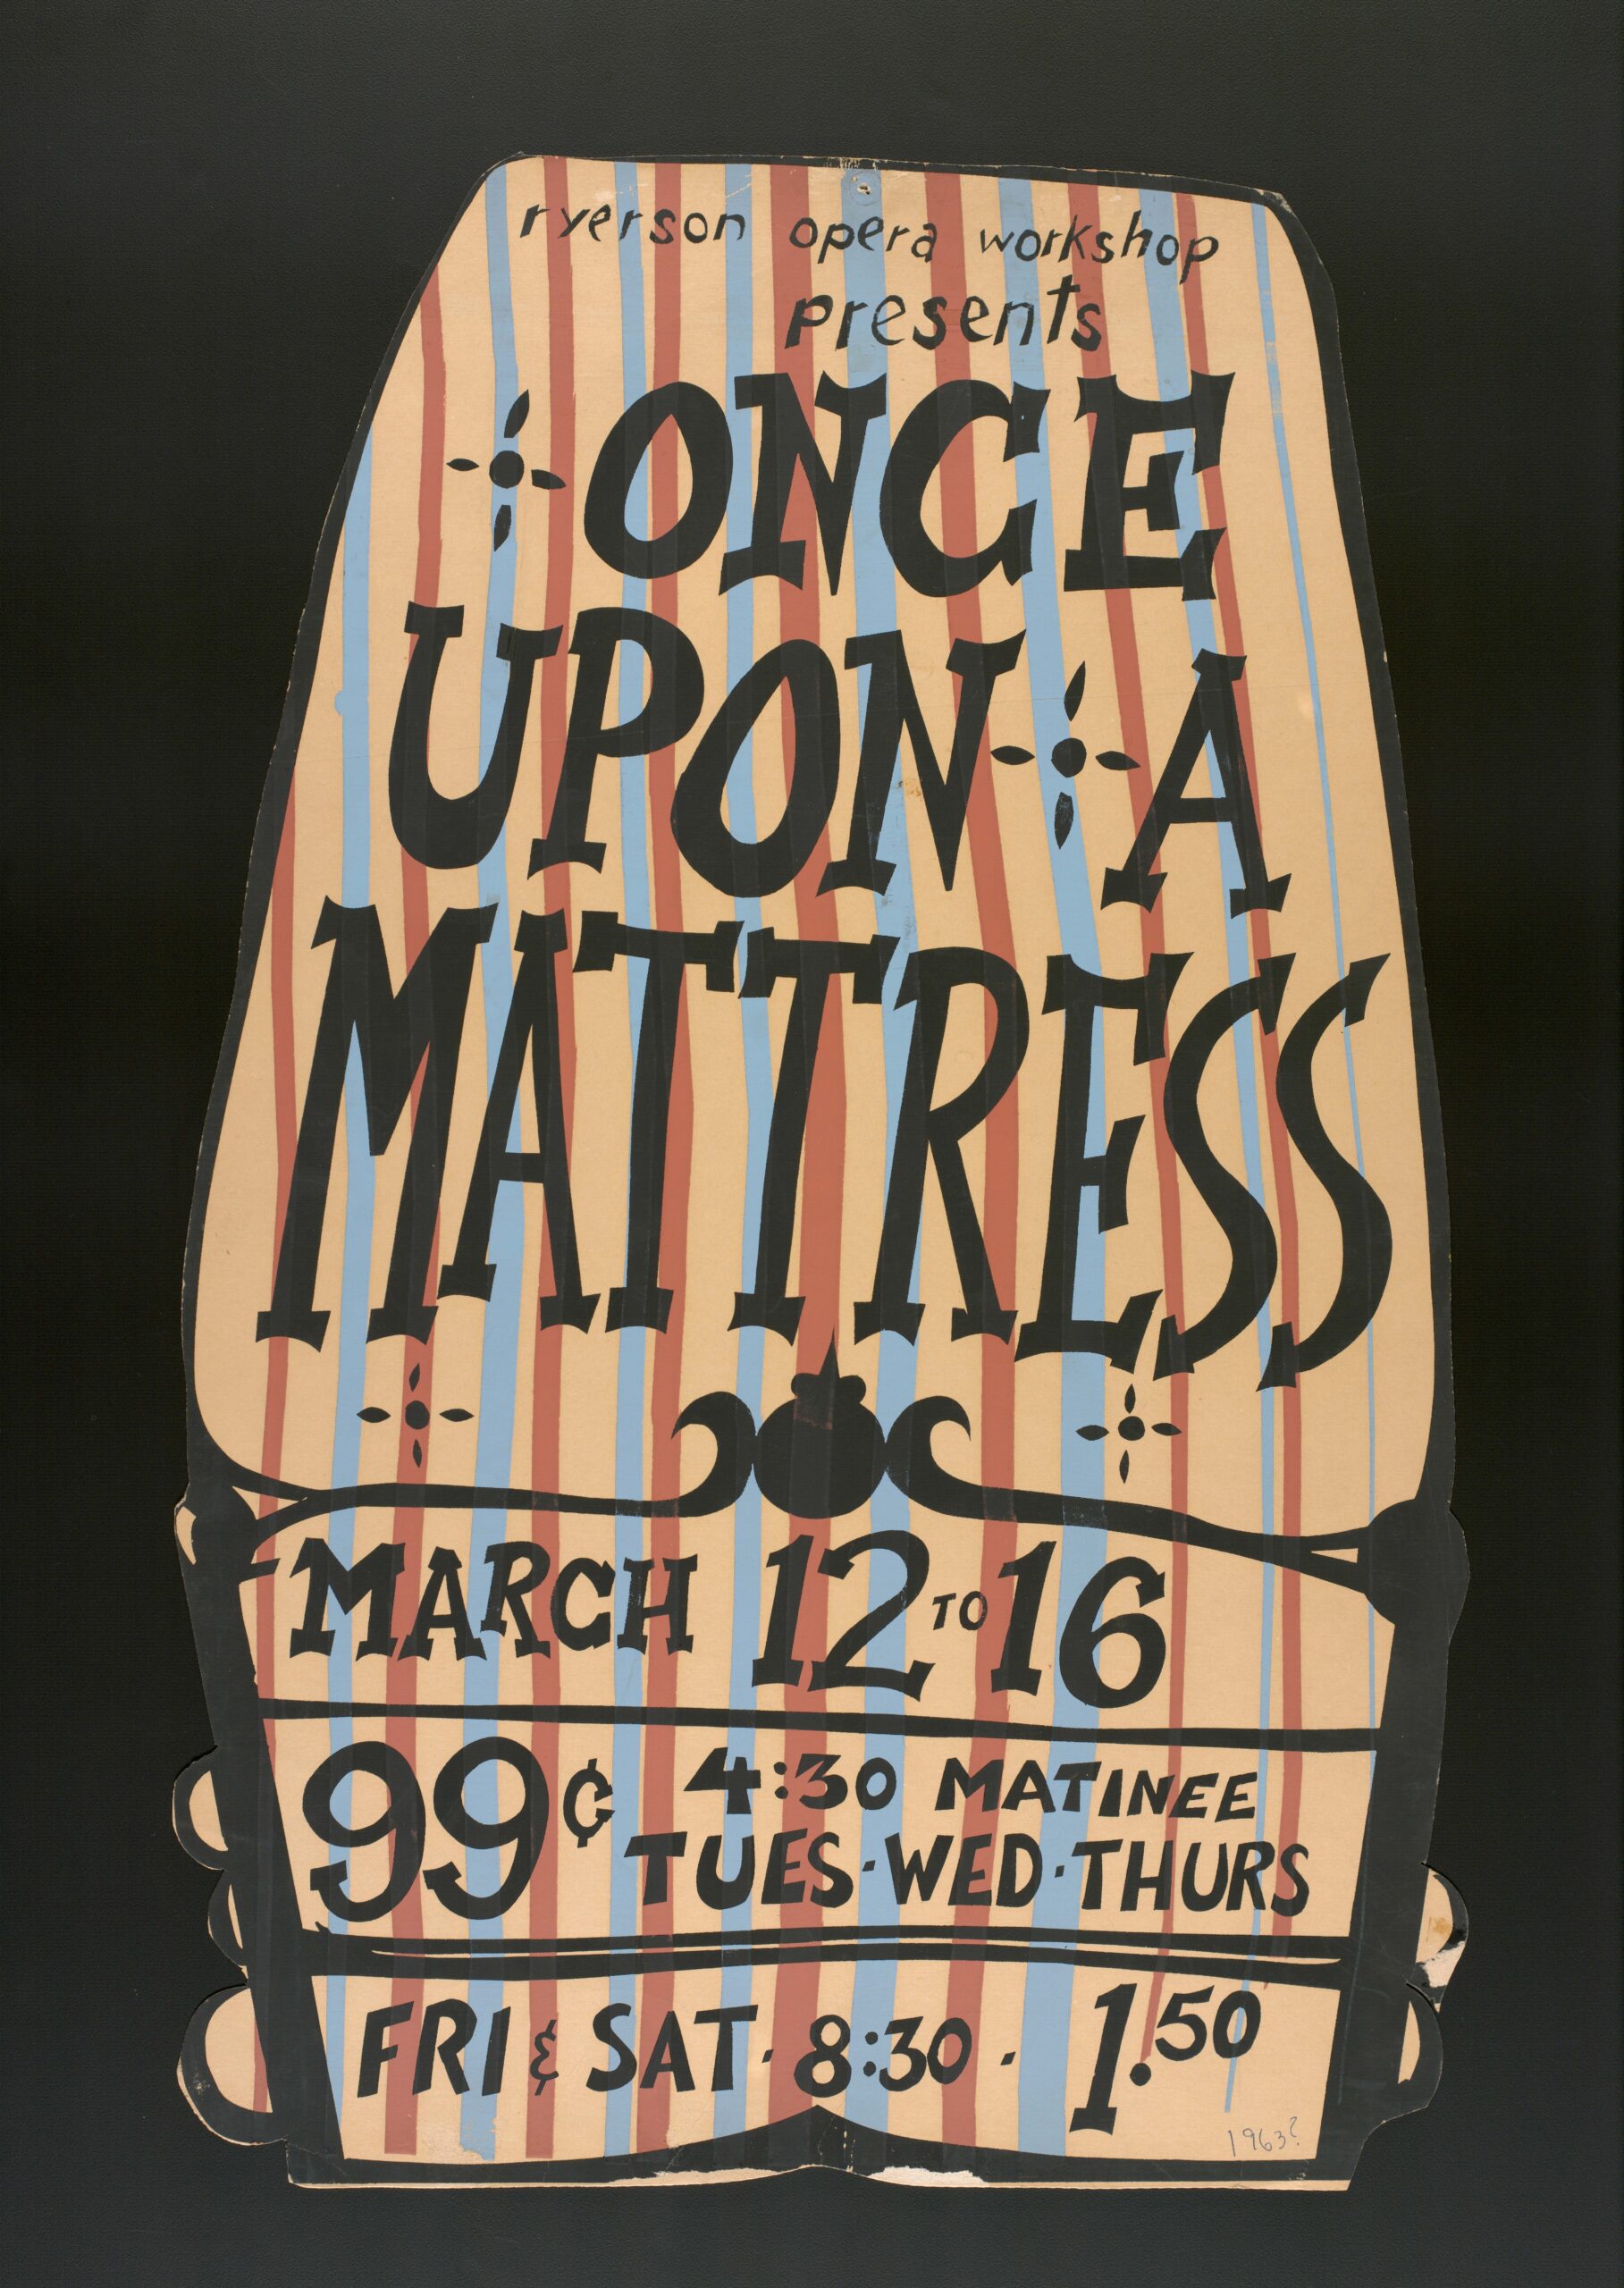 Once Upon a Mattress Ryerson Opera Workshop poster, 1963